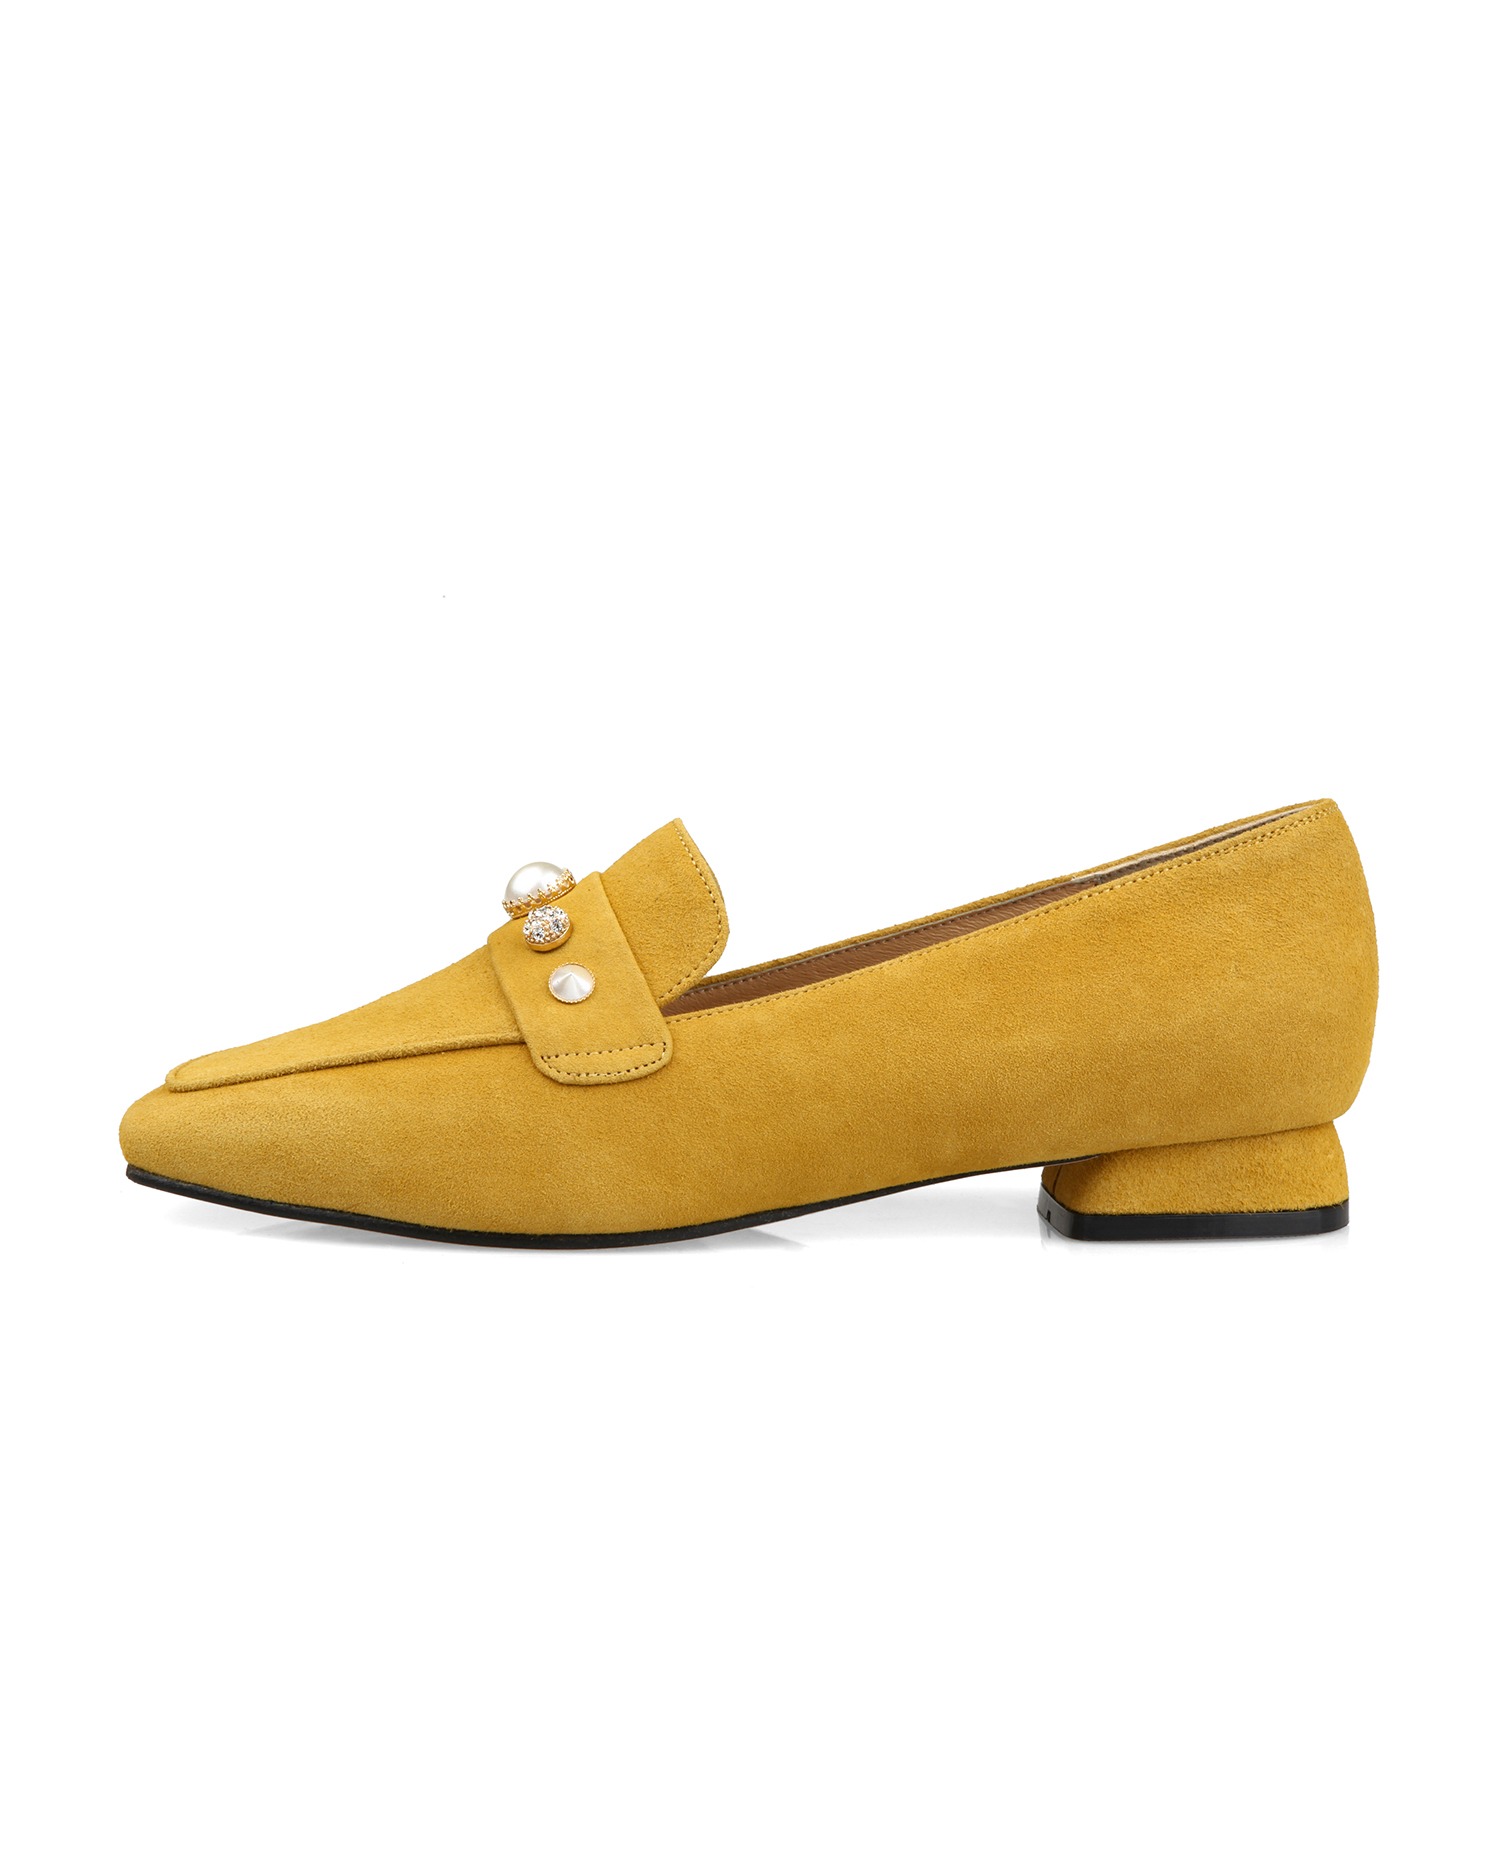 Dreamer Loafers - Mustard